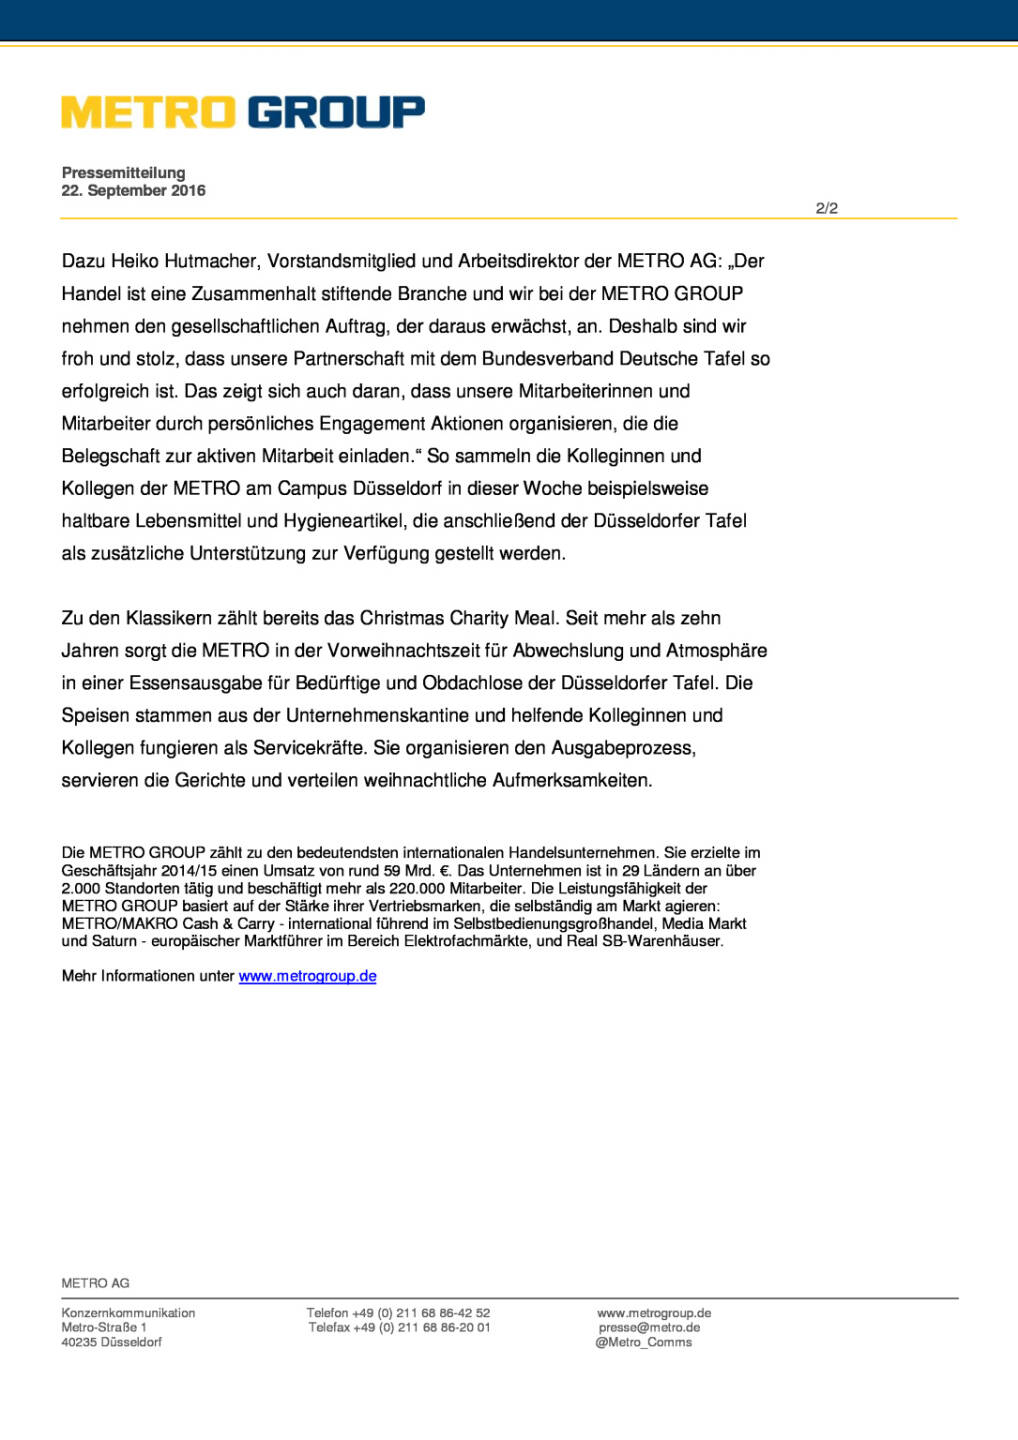 Metro Group: Partnerschaft mit Bundesverband Deutsche Tafel, Seite 2/2, komplettes Dokument unter http://boerse-social.com/static/uploads/file_1819_metro_group_partnerschaft_mit_bundesverband_deutsche_tafel.pdf